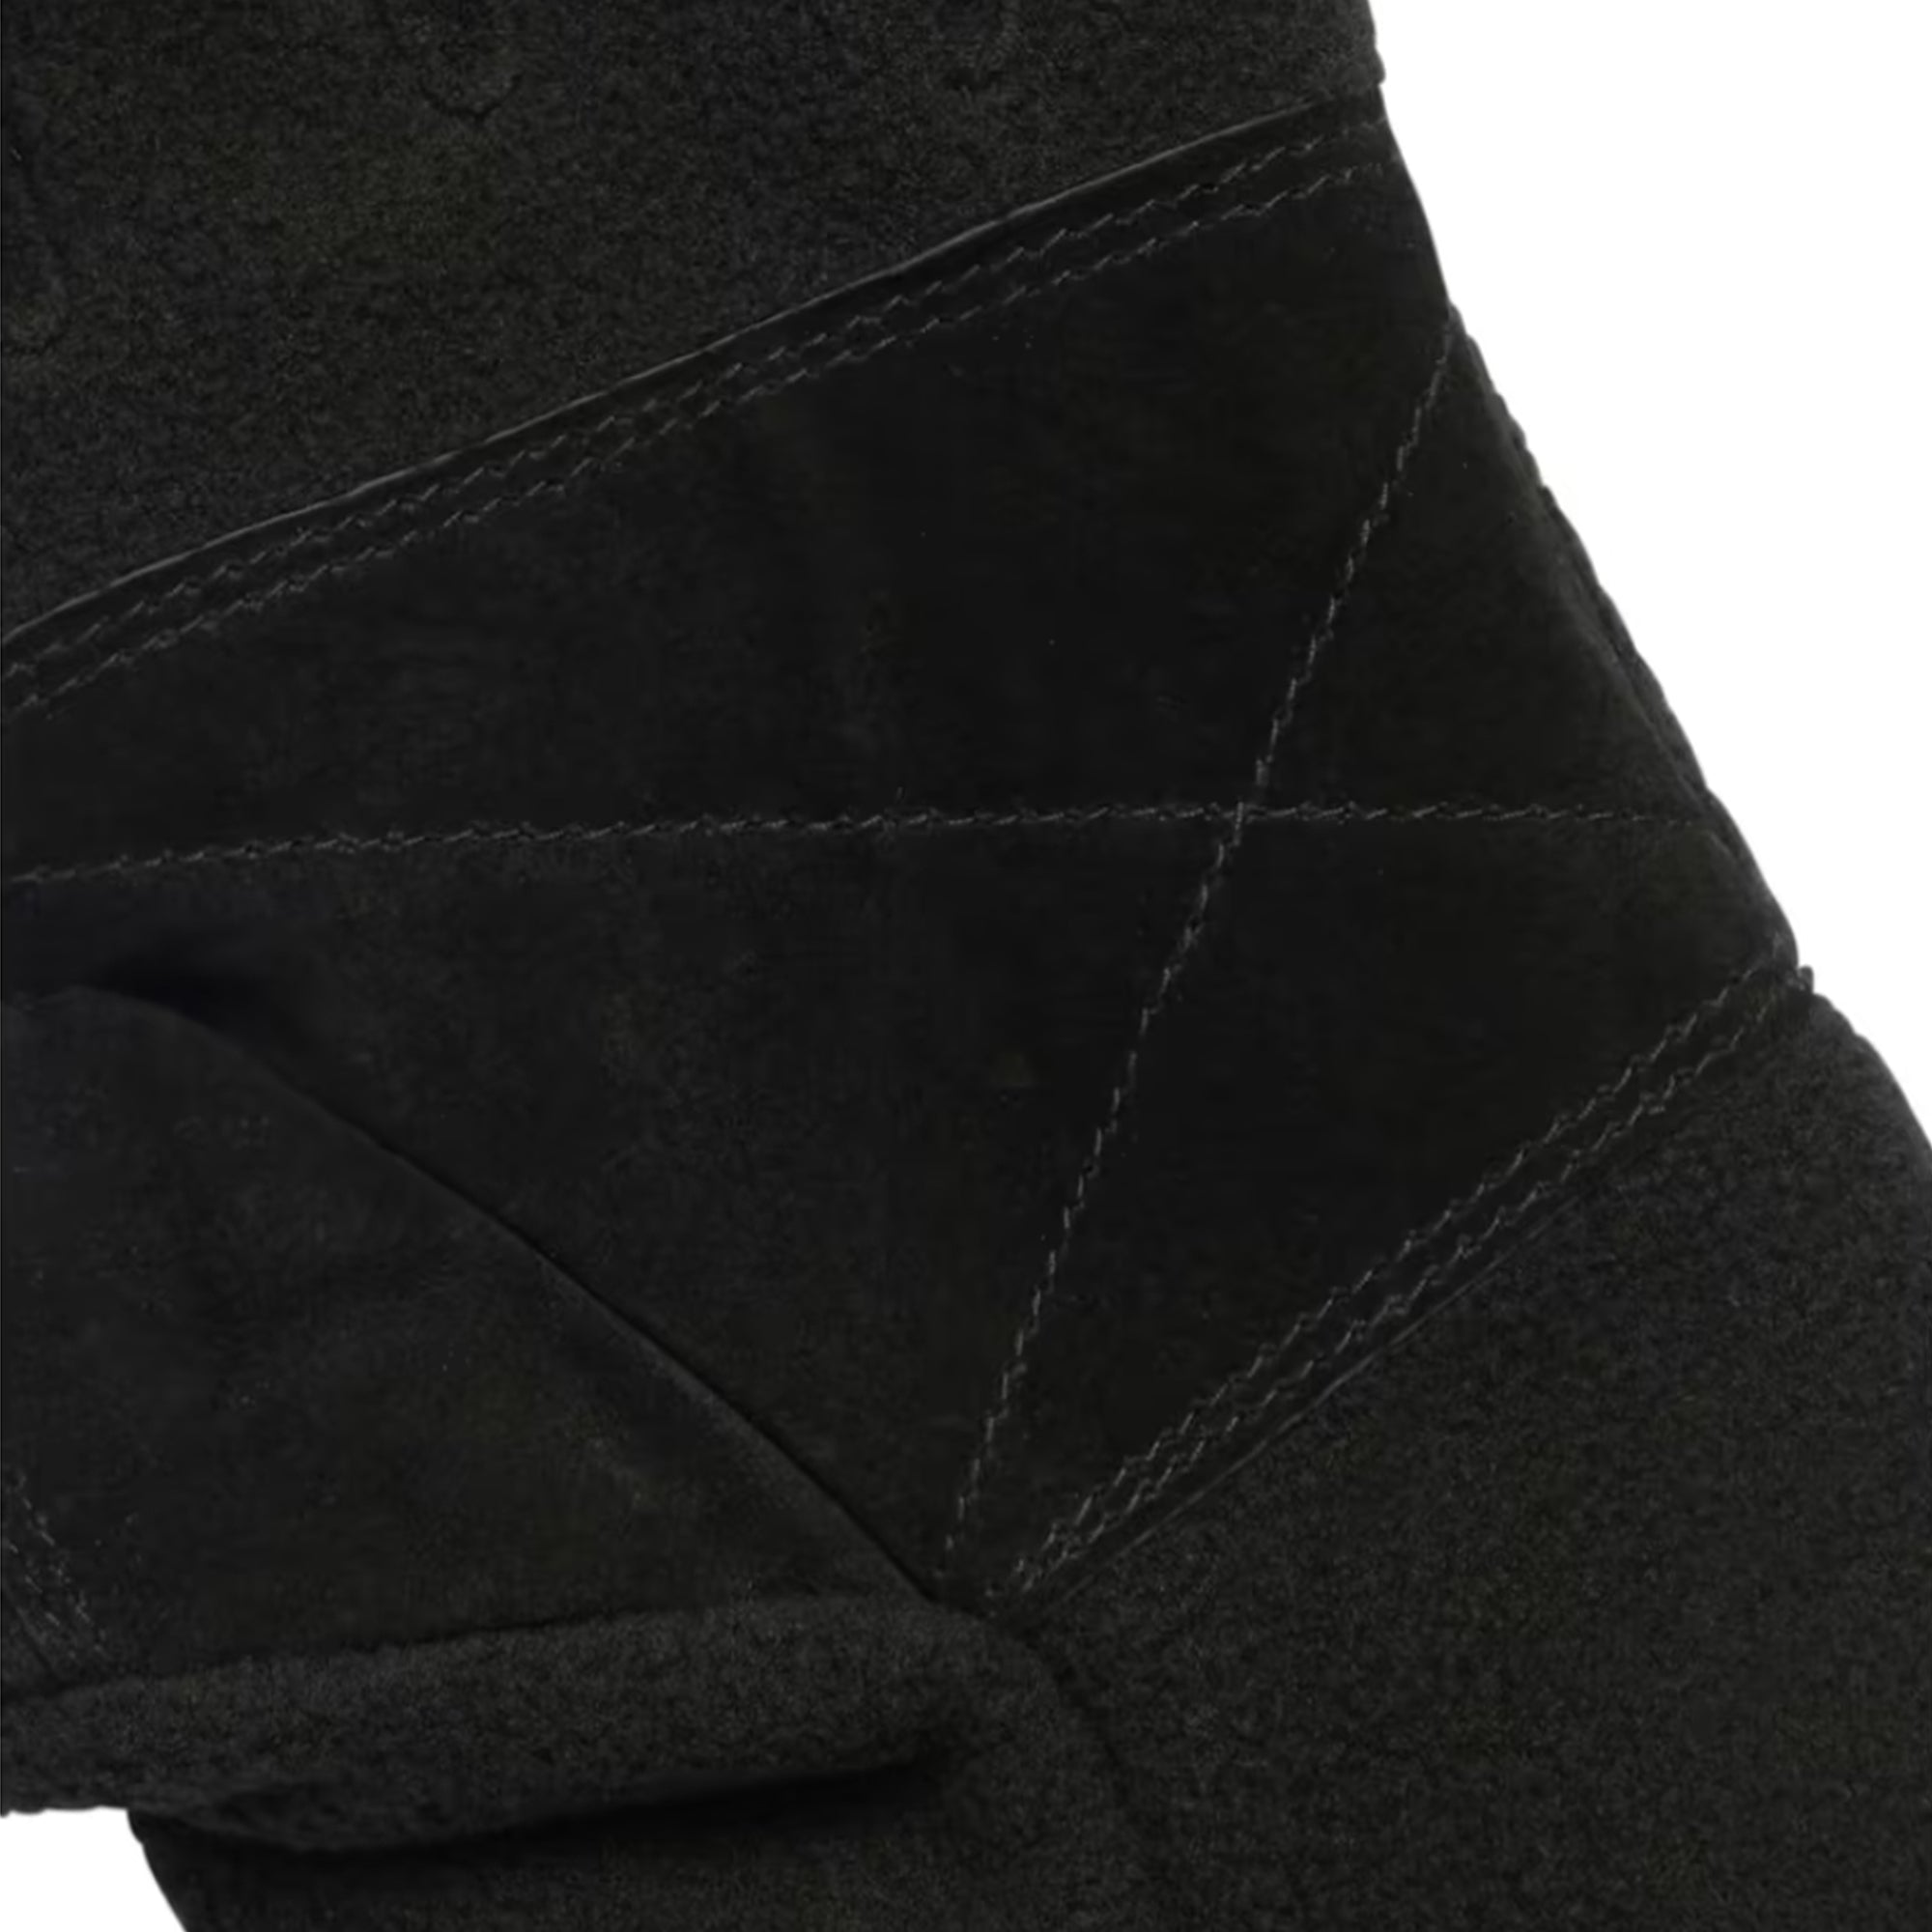 Barbour Coalford Fleece Gloves - Black